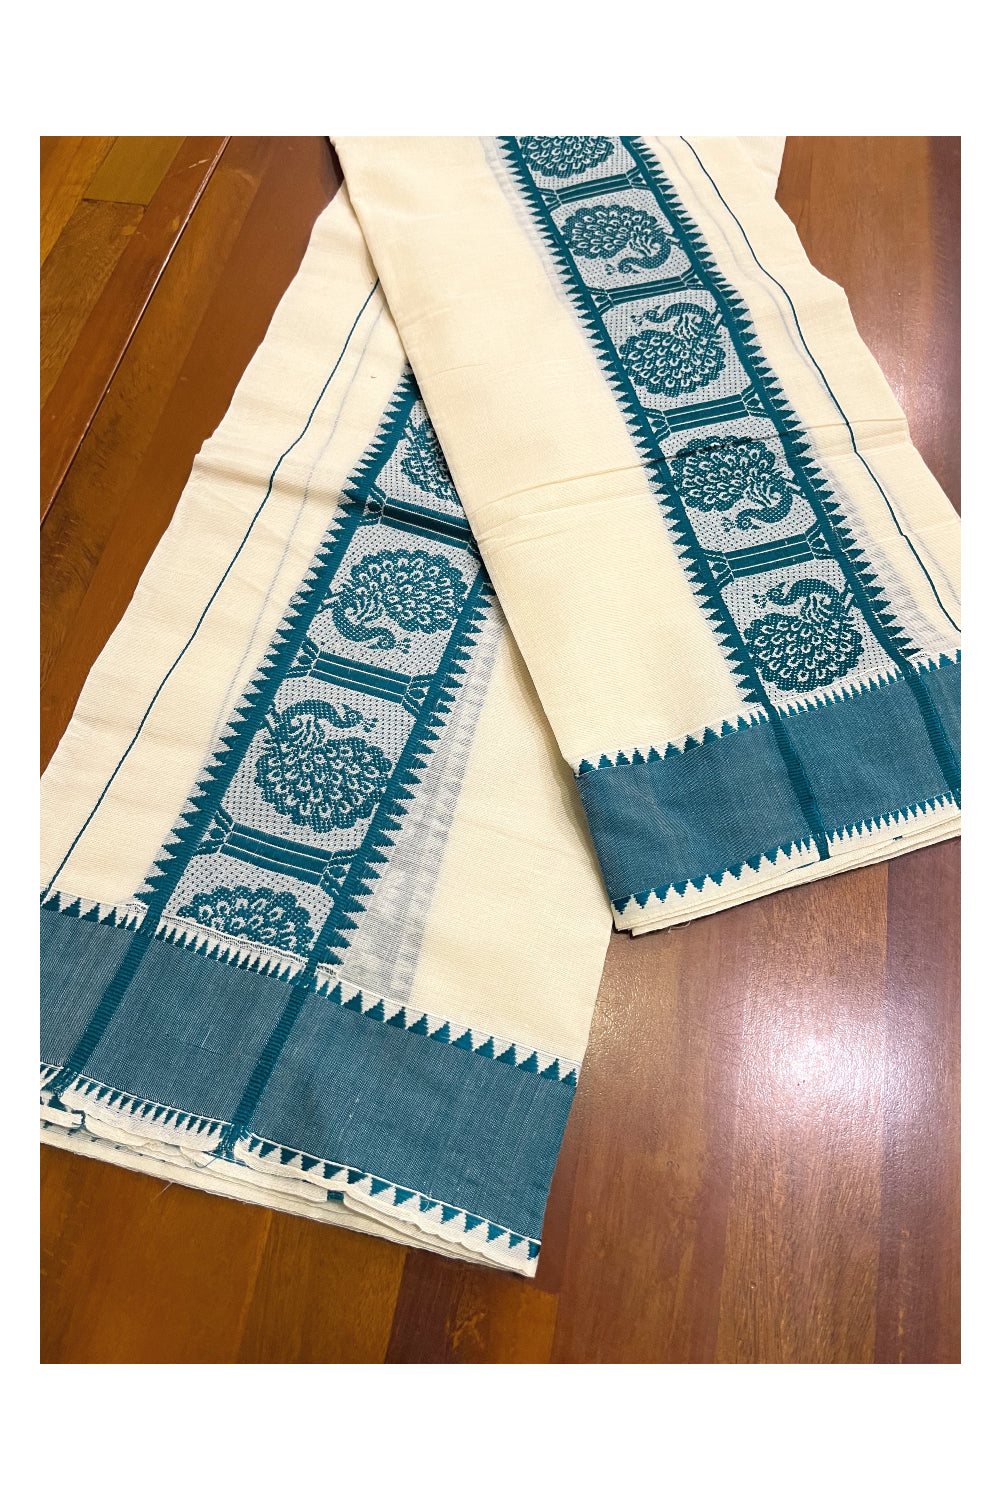 Kerala Cotton Single Set Mundu (Mundum Neriyathum) with Green Woven Designs on Border - 2.80Mtrs